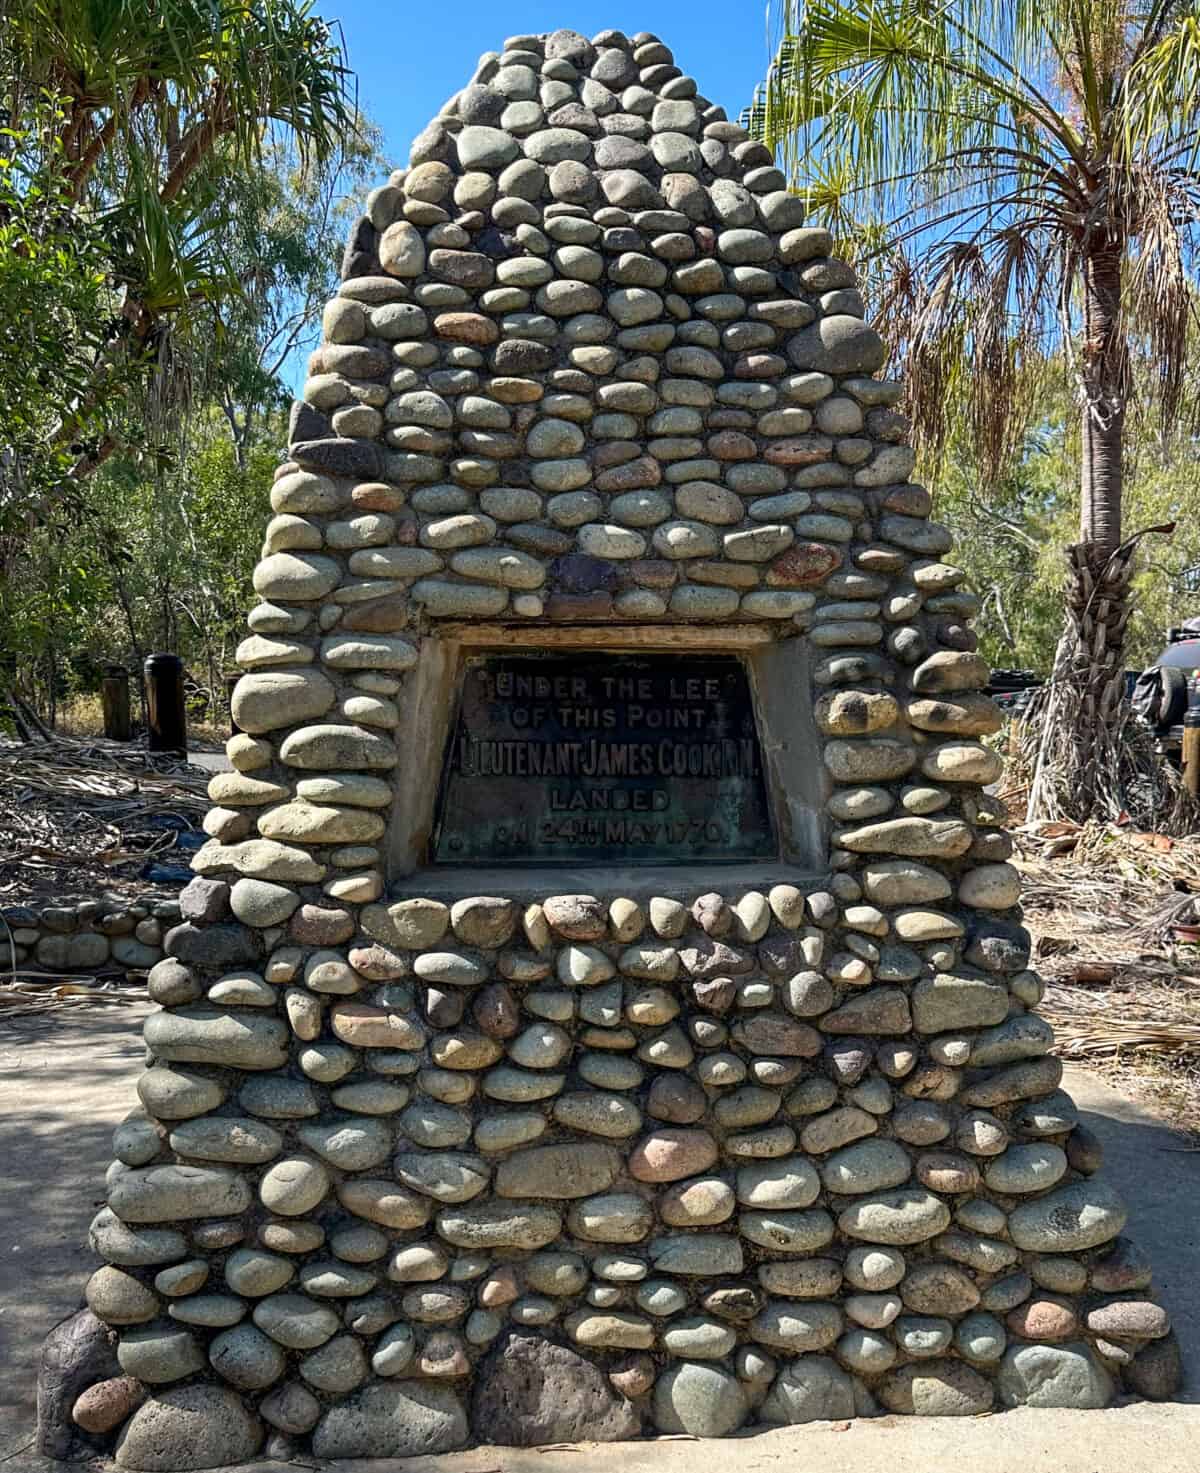 Captain Cook Monument.